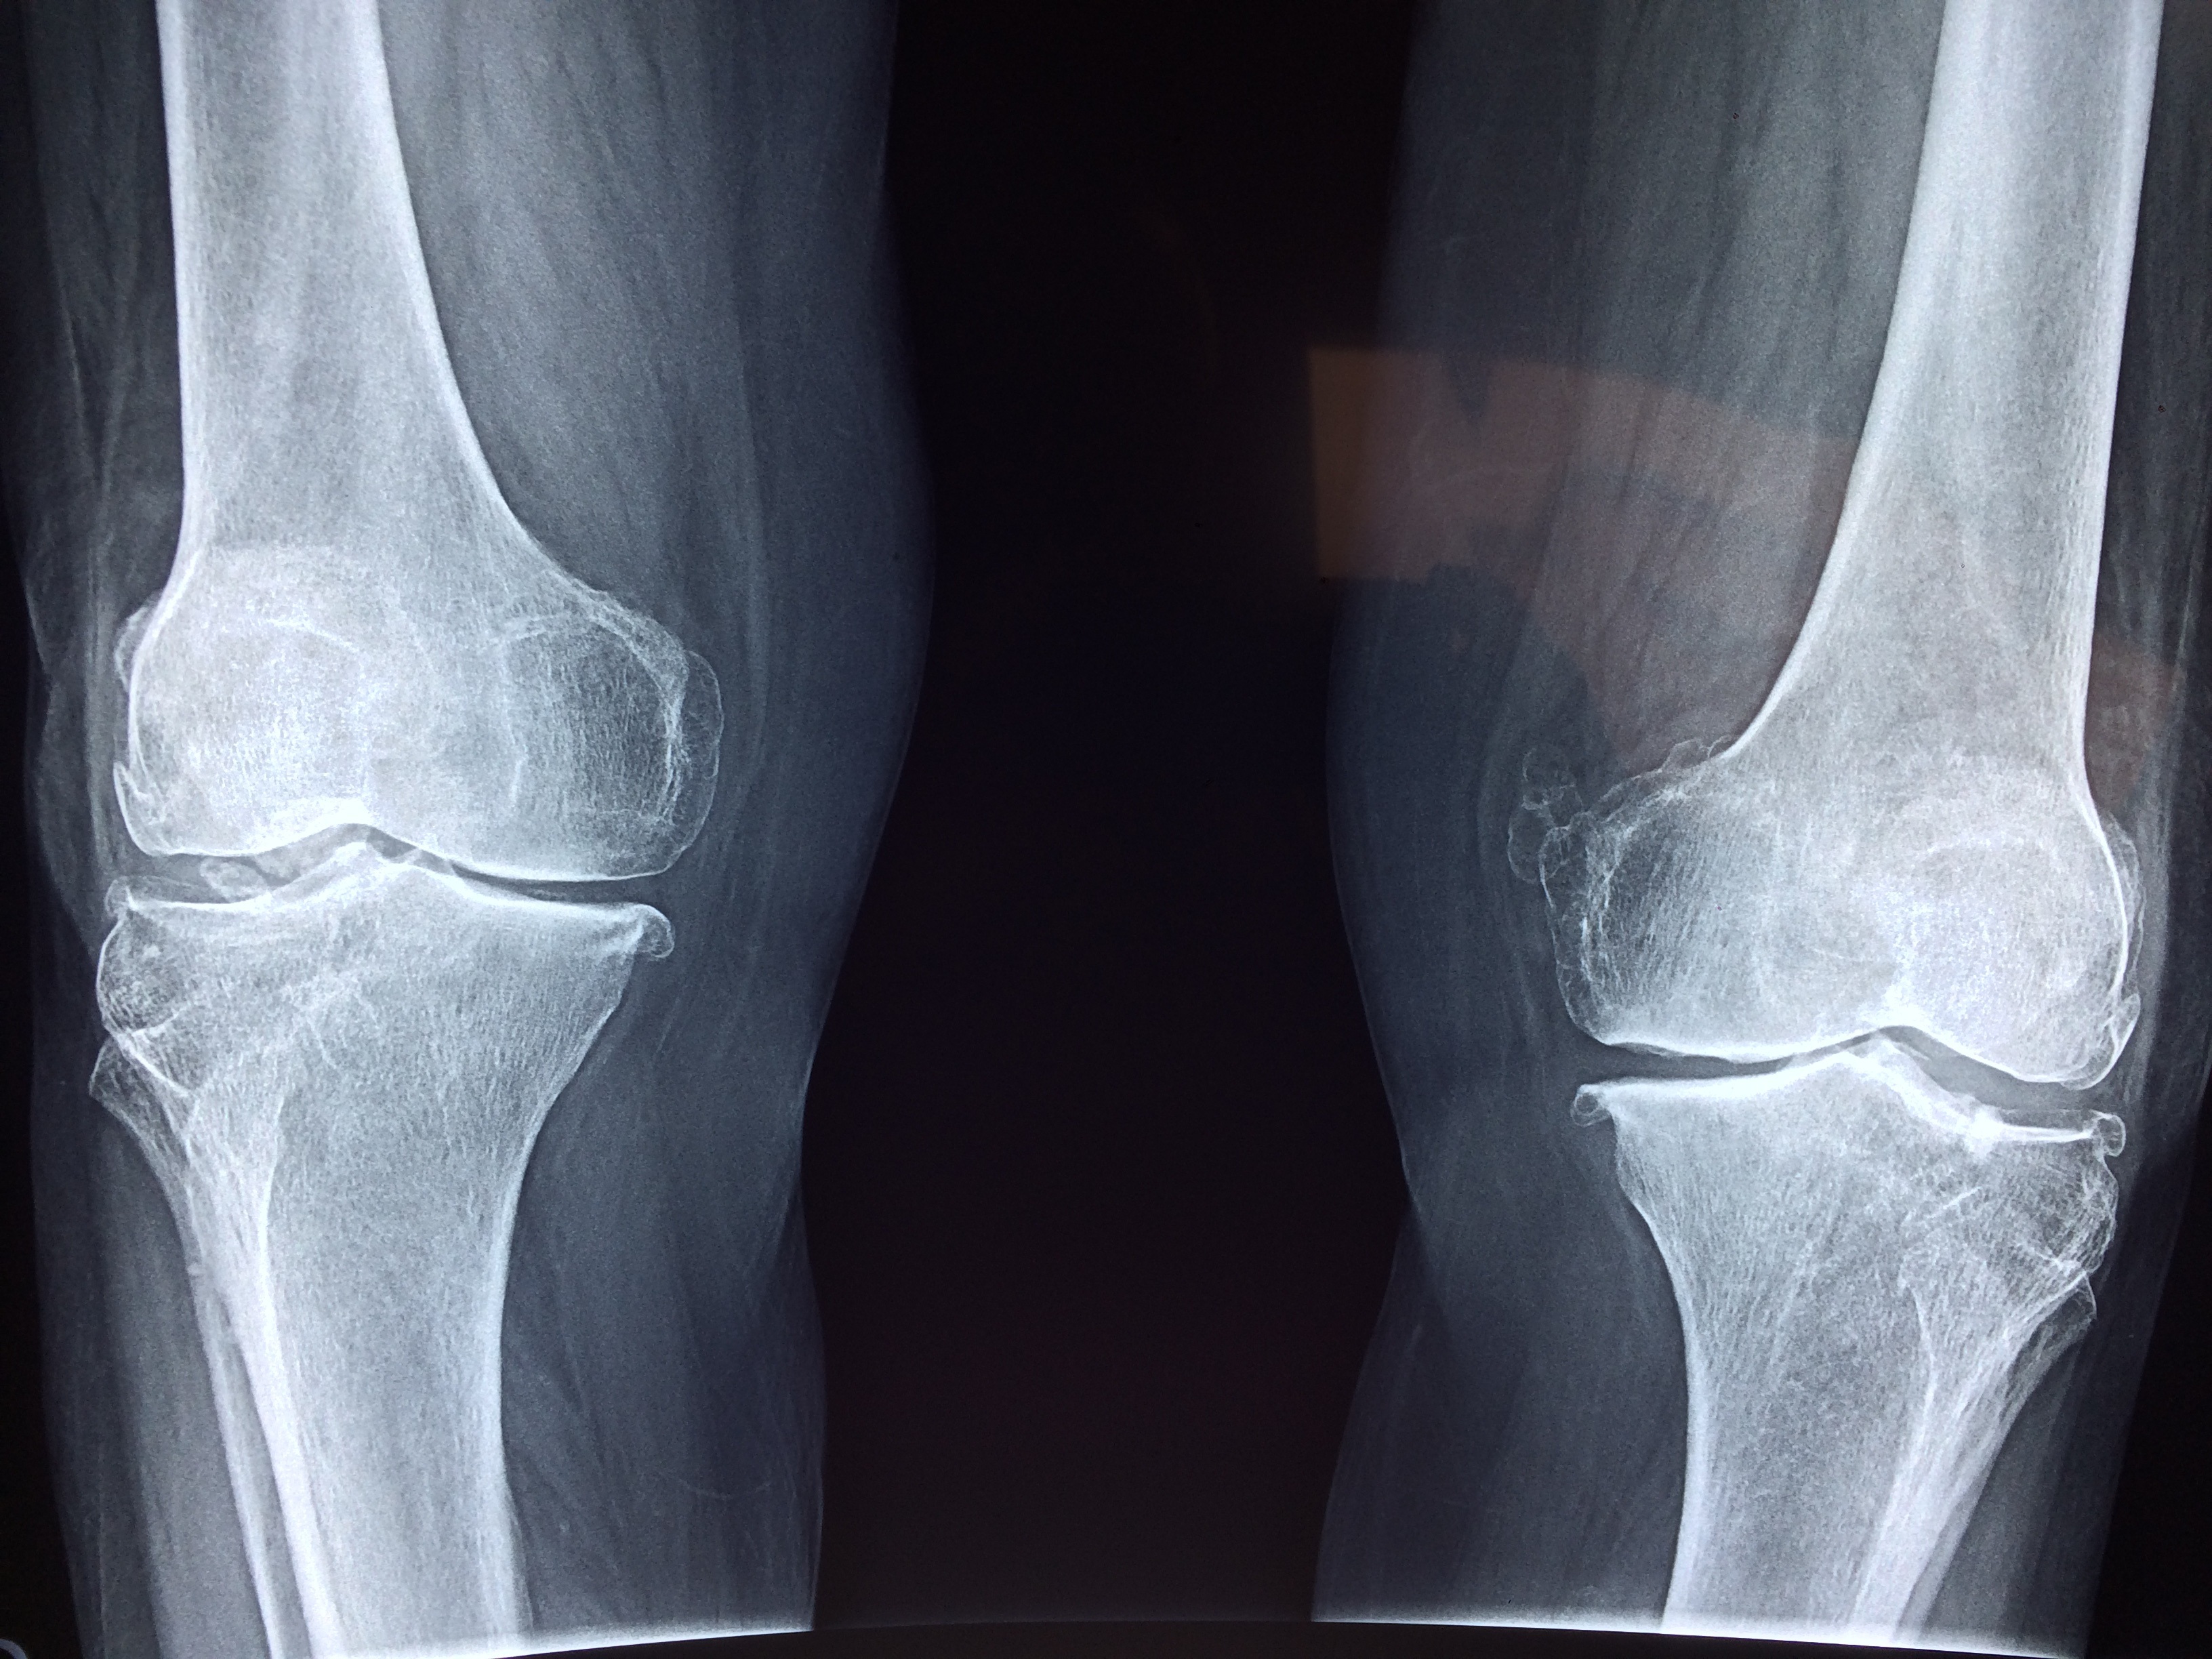 Osteoarthritis (OA) Biomarker Suitable as a Point-of-Care Diagnostic